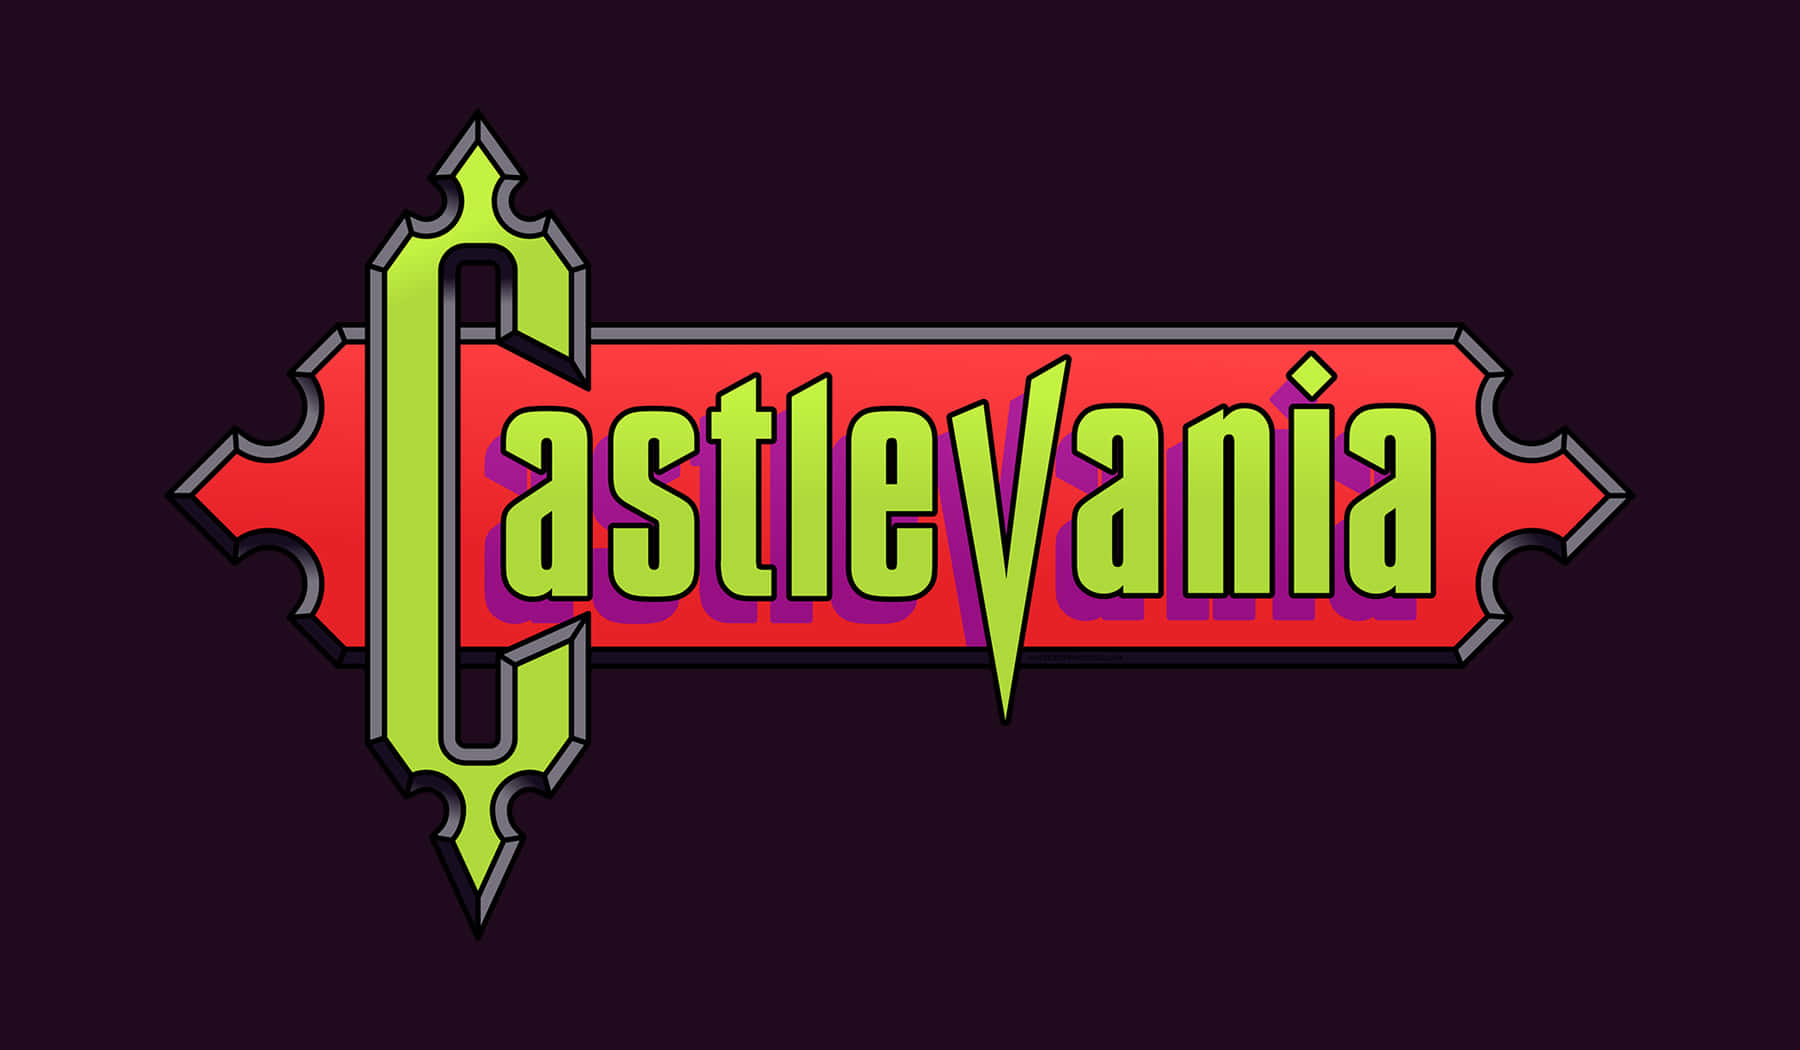 Viviun'epica Avventura In Castlevania.